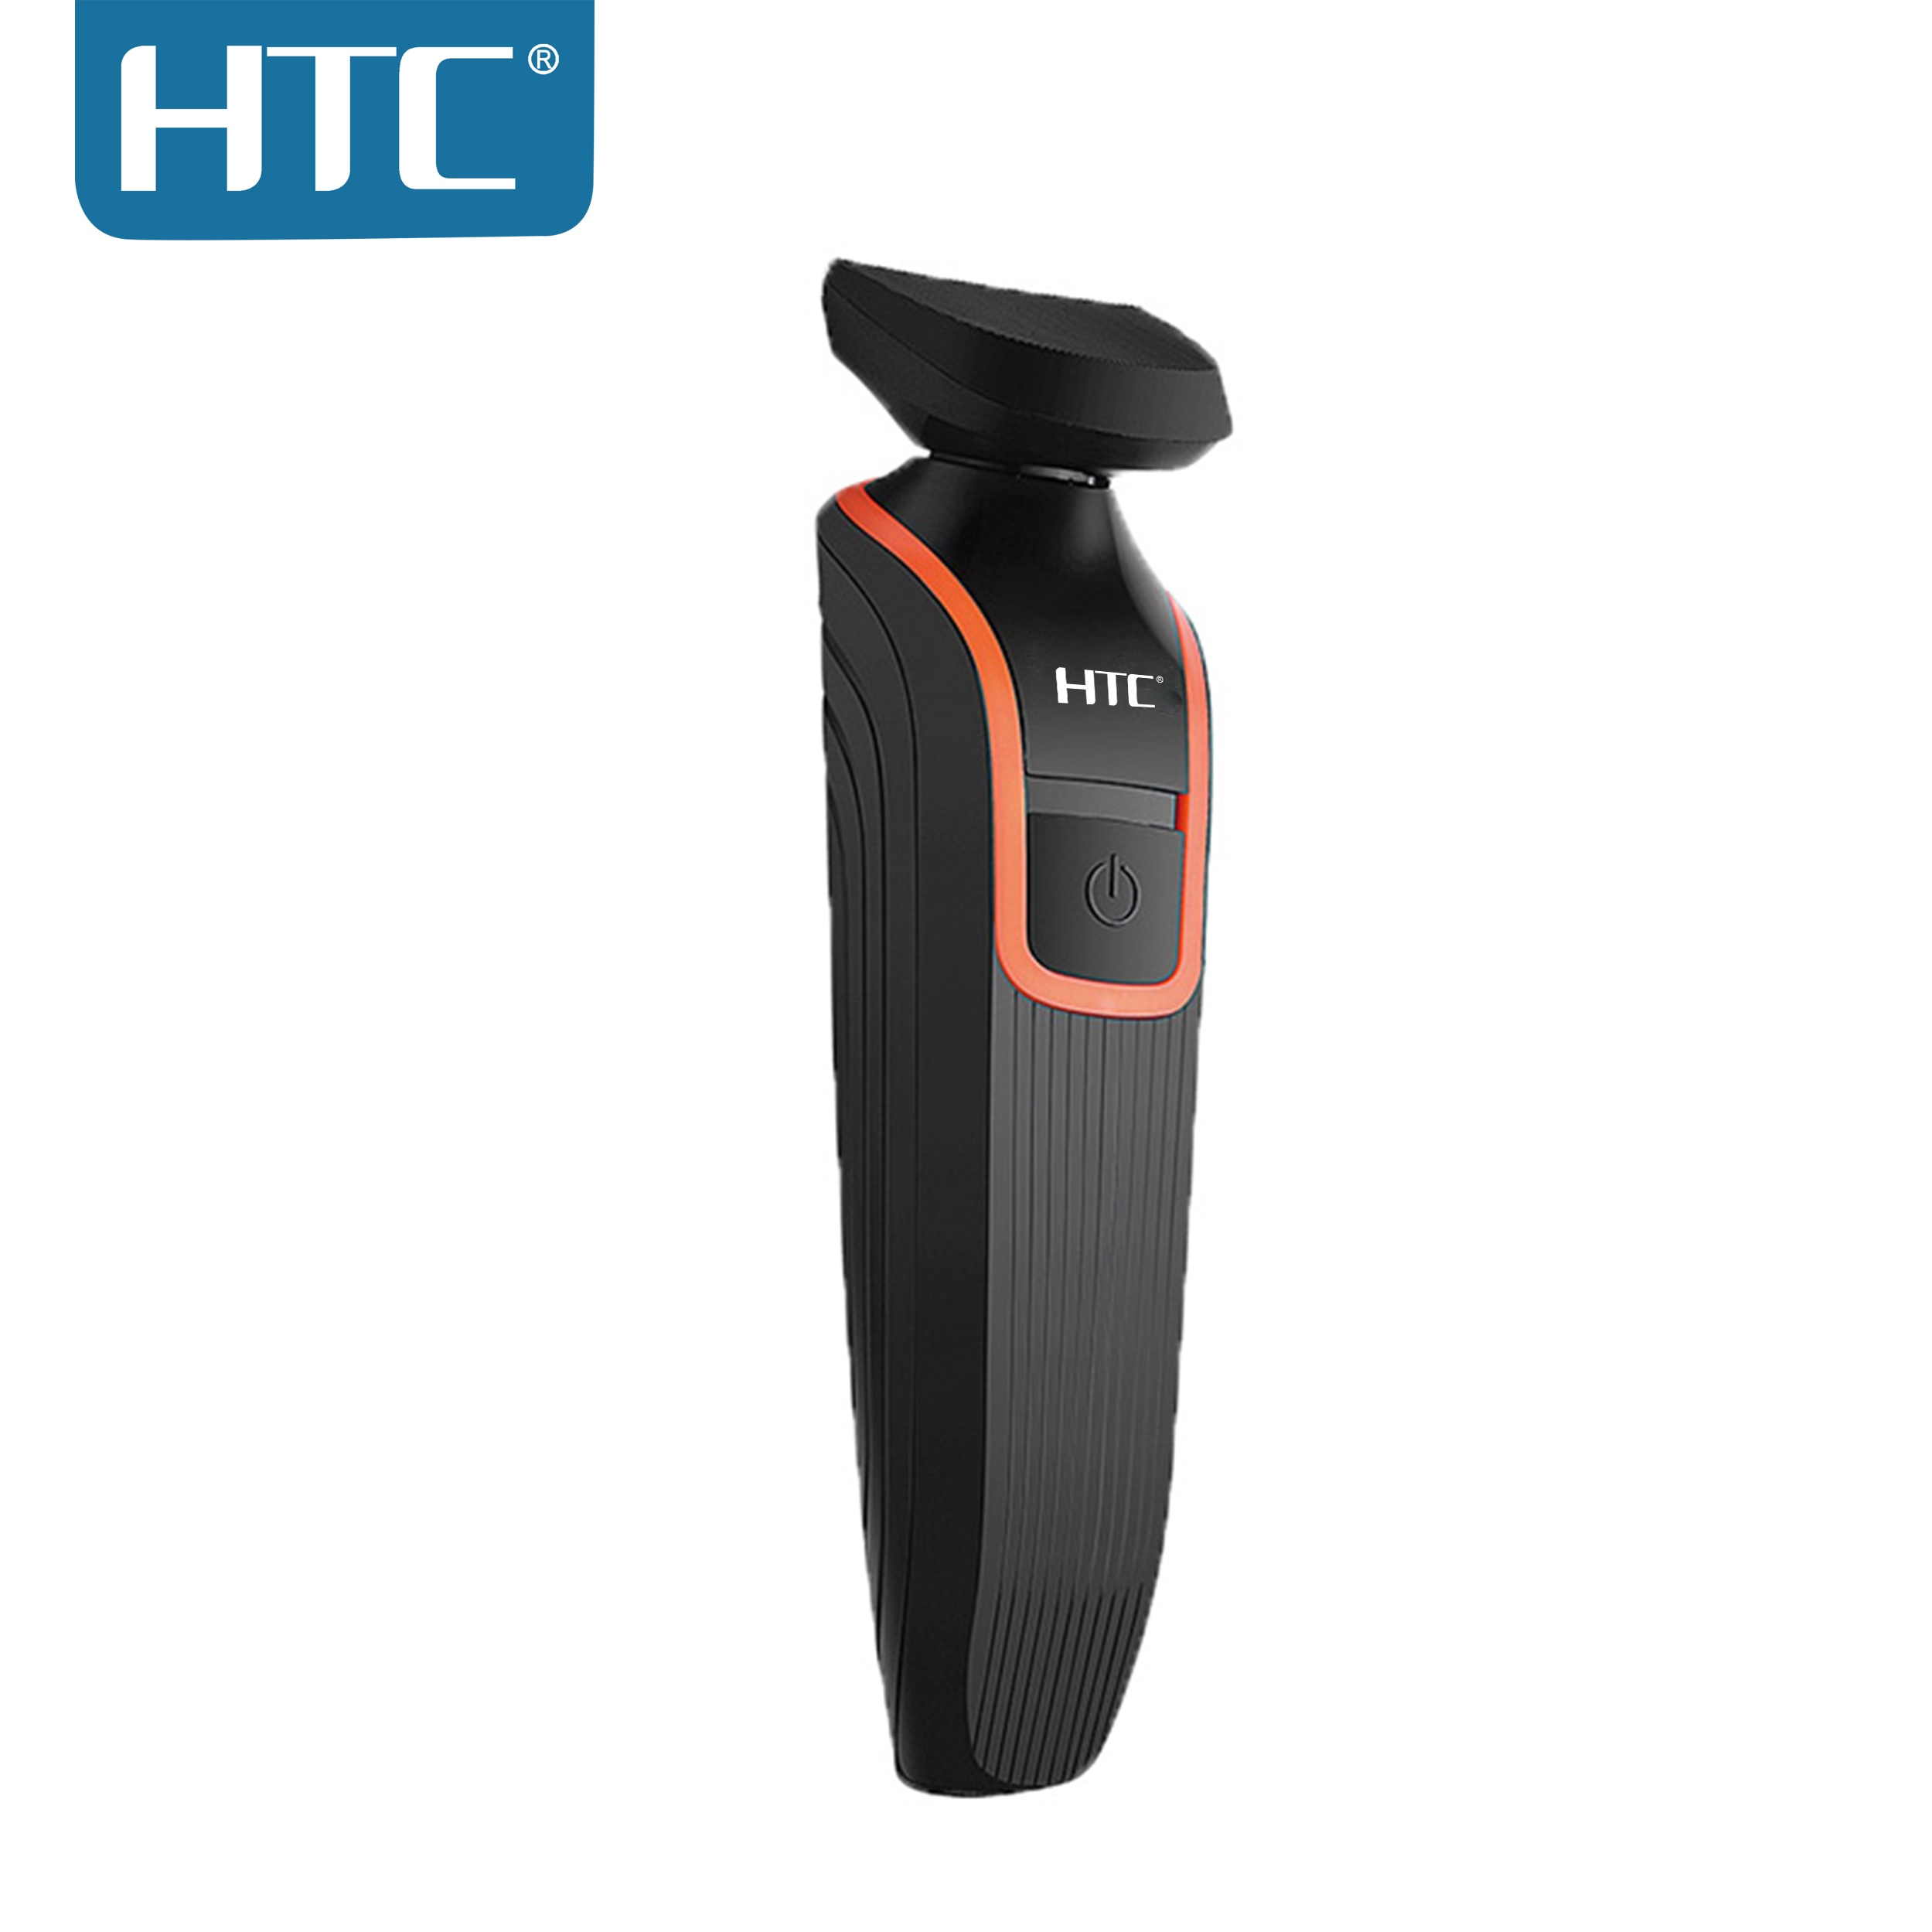 Tendeuse HTC AT-1322